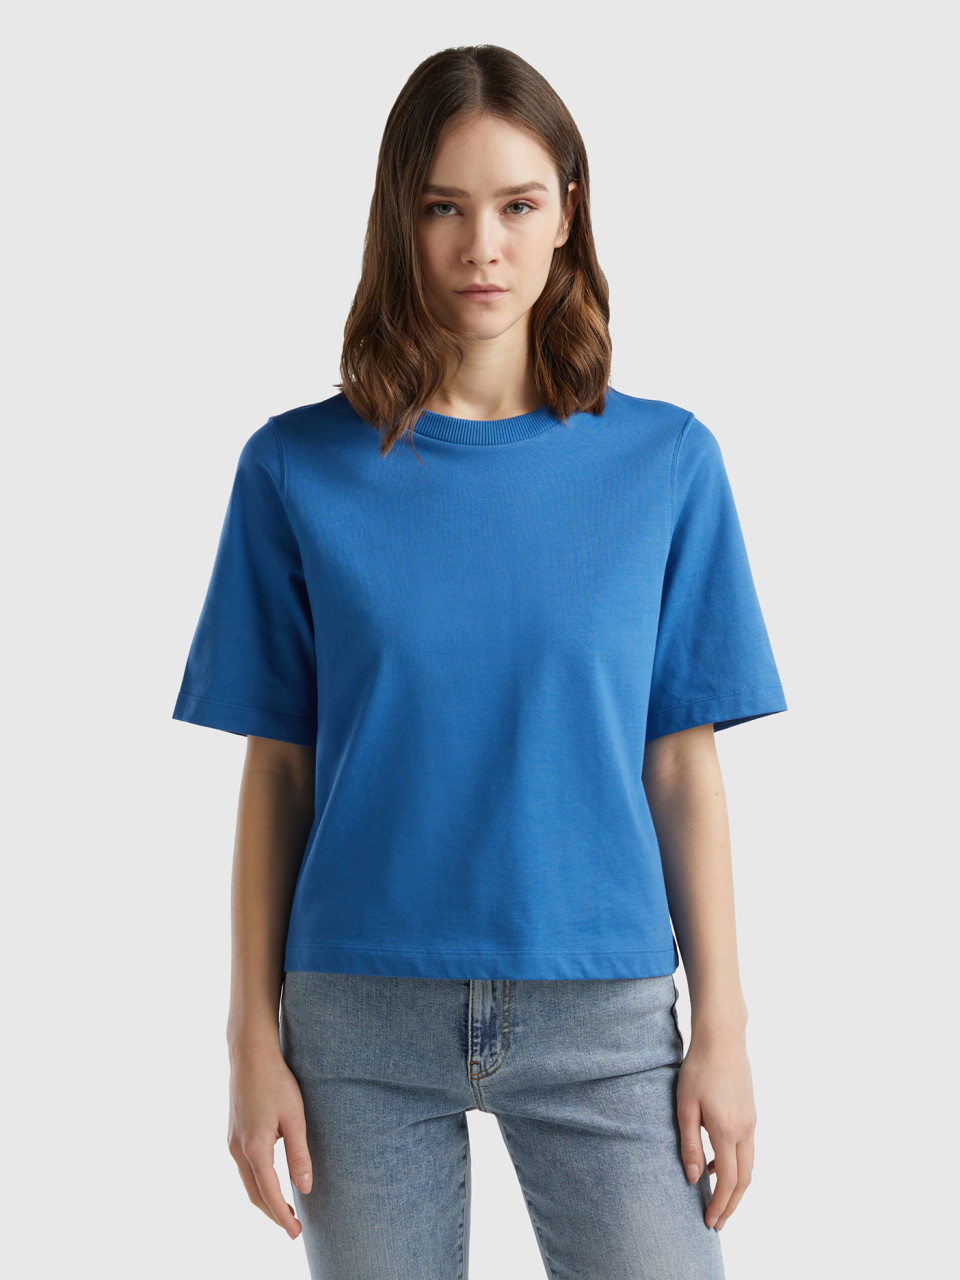 Benetton, 100% Cotton Boxy Fit T-shirt, Blue, Women